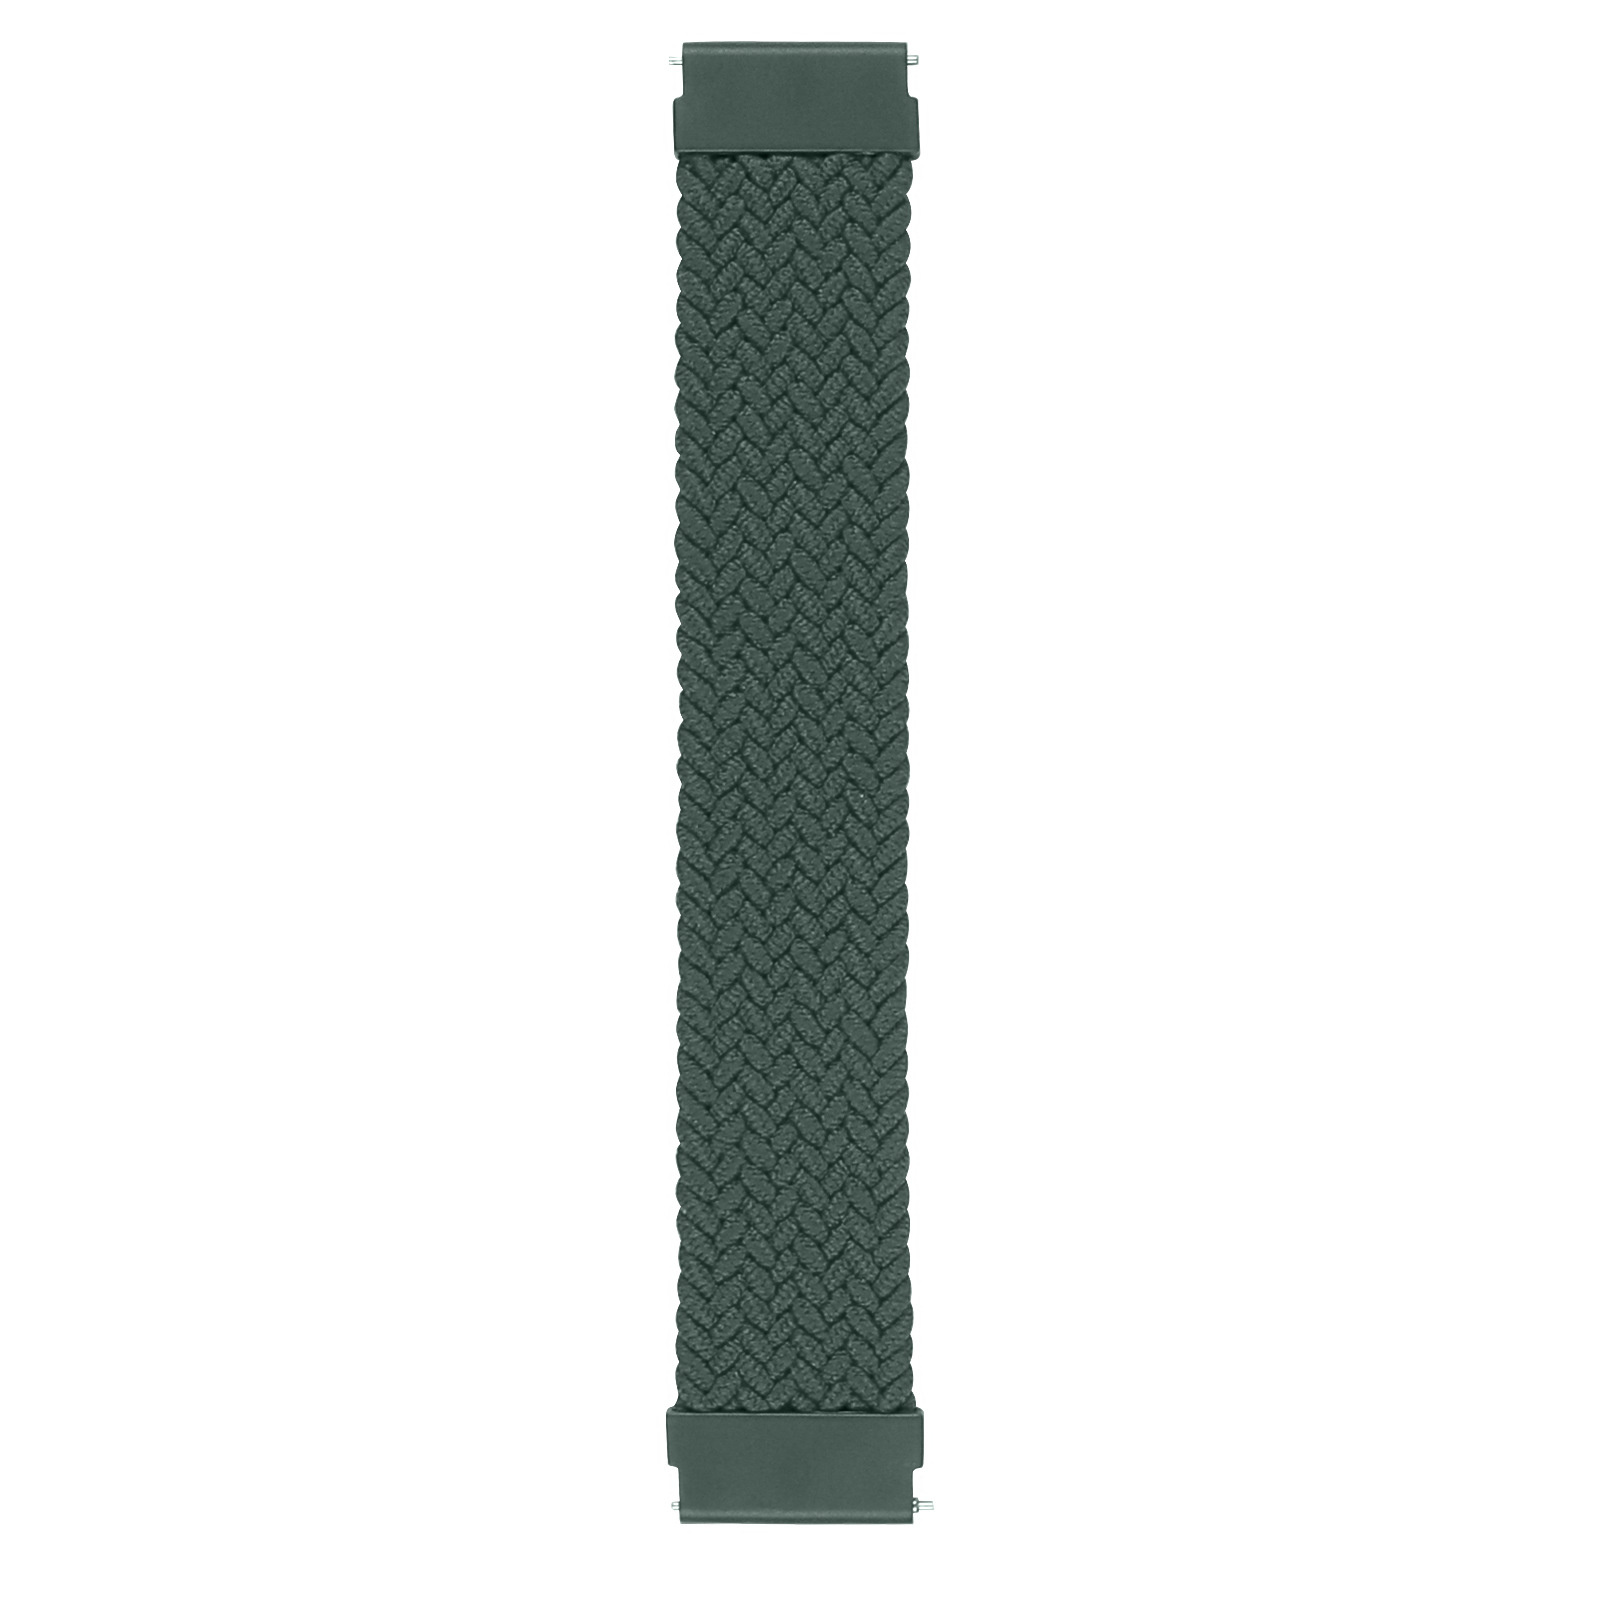 Samsung Galaxy Watch Nylon Braided Solo Strap - Inverness Green